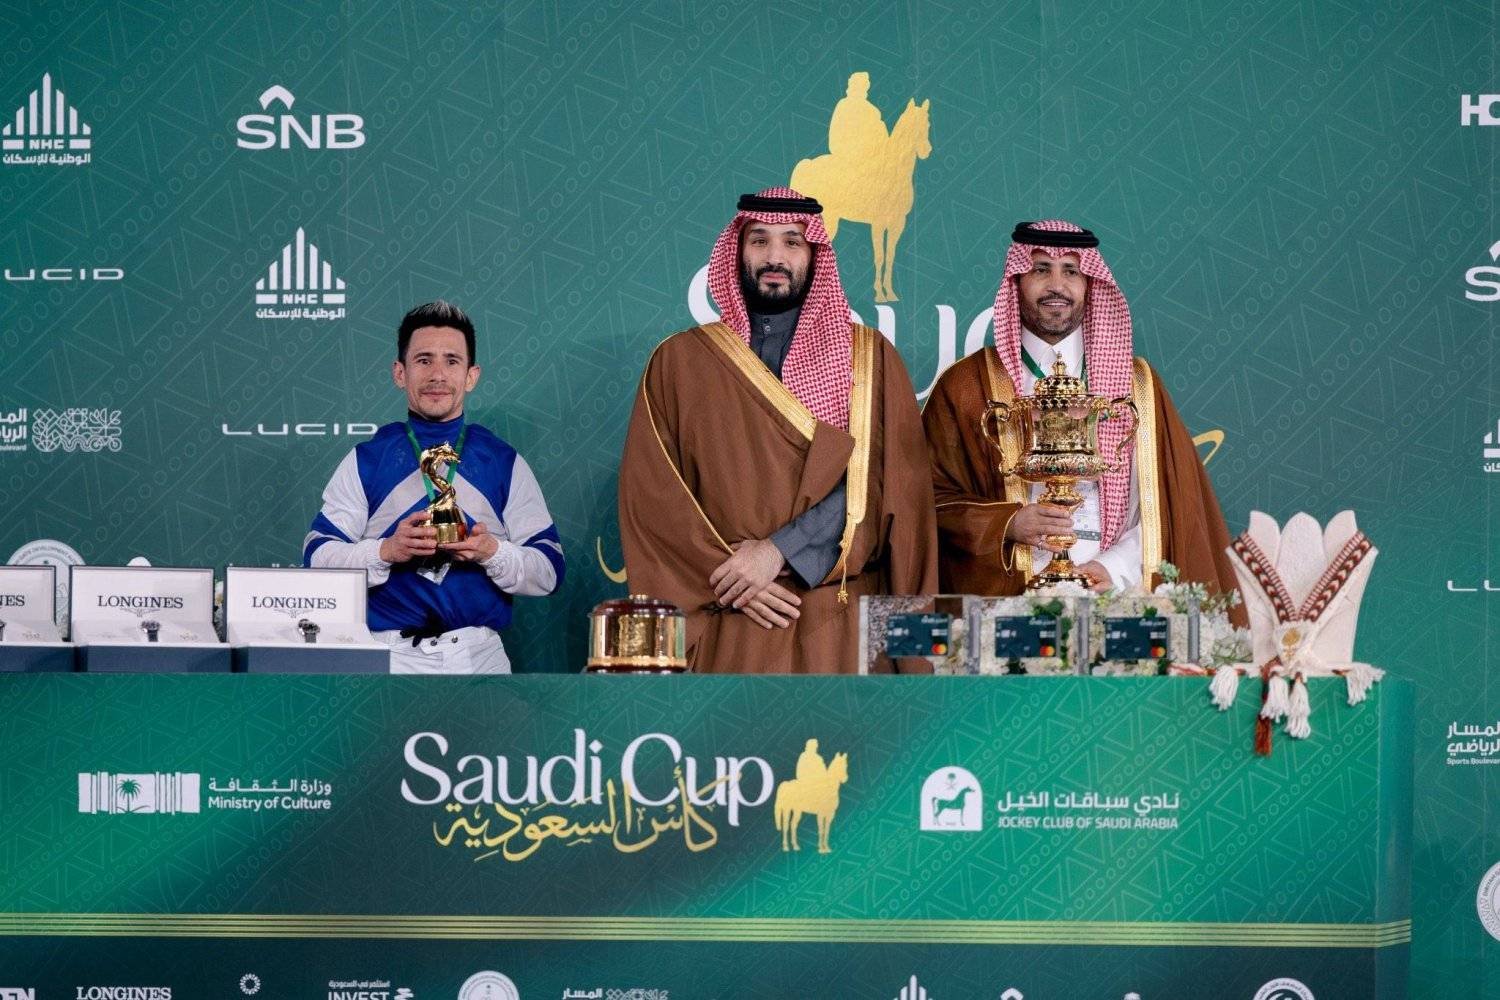 Saudi Crown Prince Mohammed bin Salman bin Abdulaziz crowned Sharaf Al-Hariri, owner of the horse “Senor Buscador,” winner of the “Saudi Cup” at the King Abdulaziz Equestrian Arena in Riyadh (Asharq Al-Awsat)